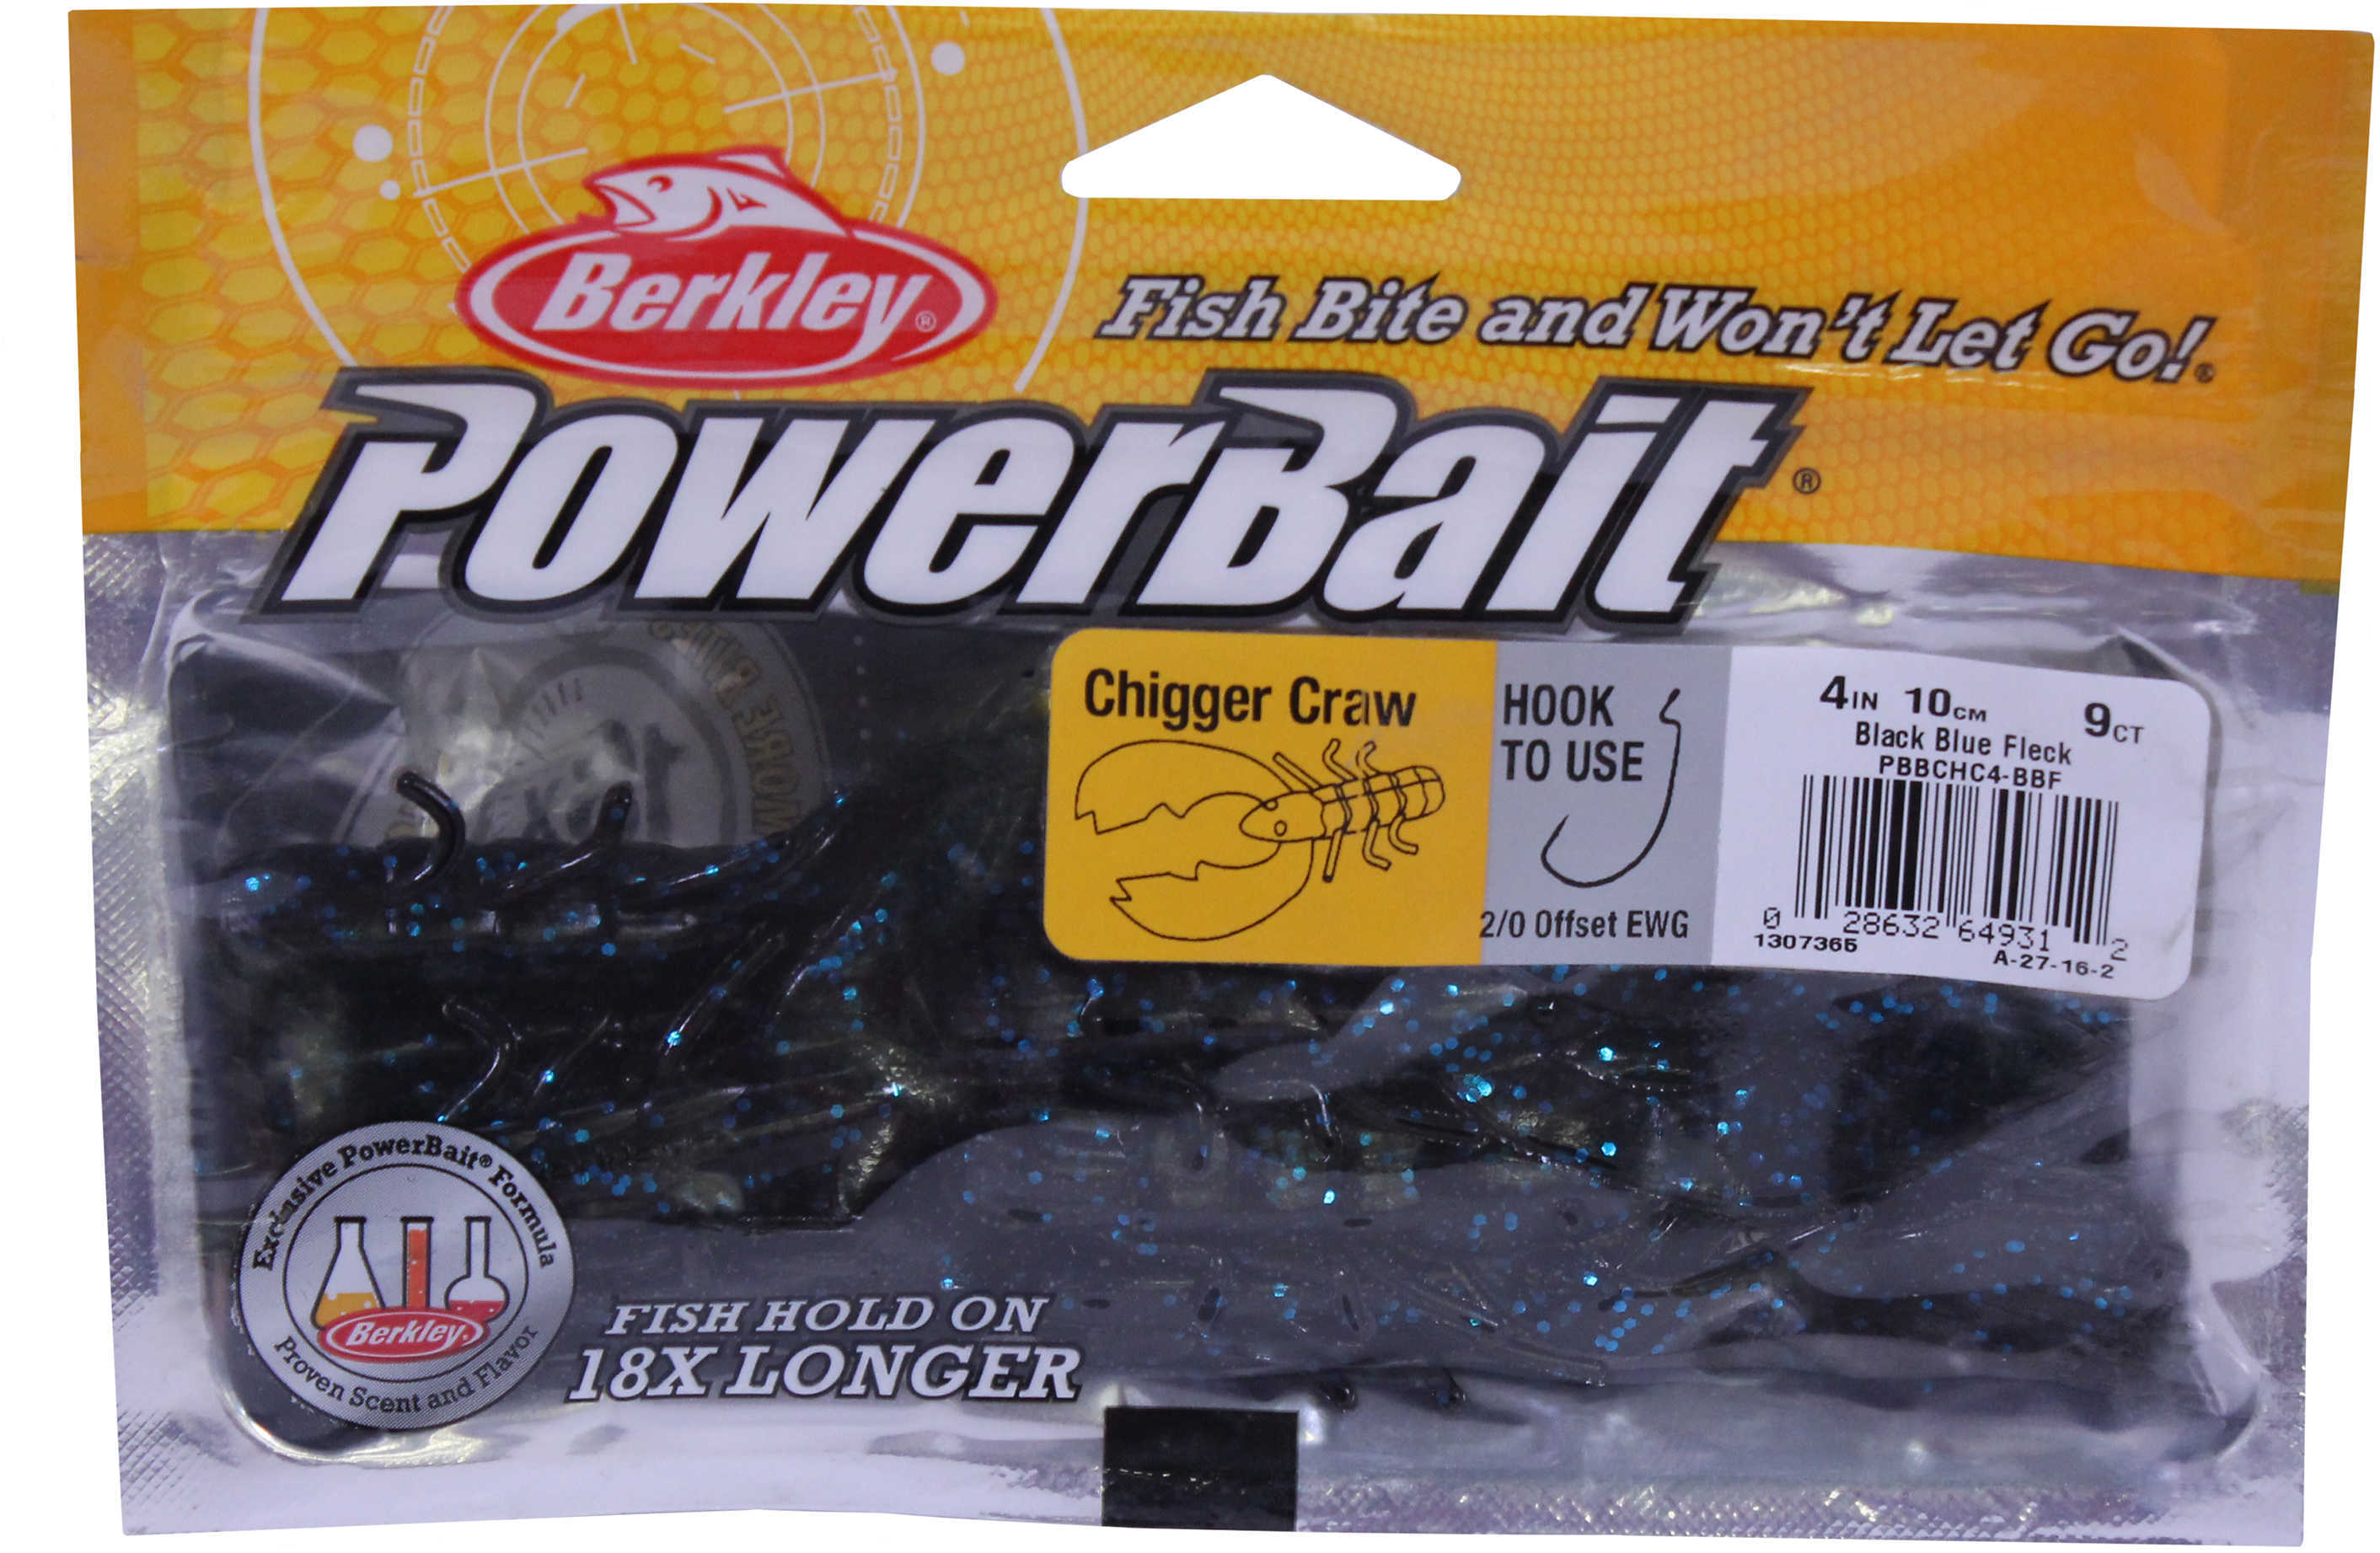 Berkley Powerbait Chigger Craw, 4" Black Blue Fleck 1307365